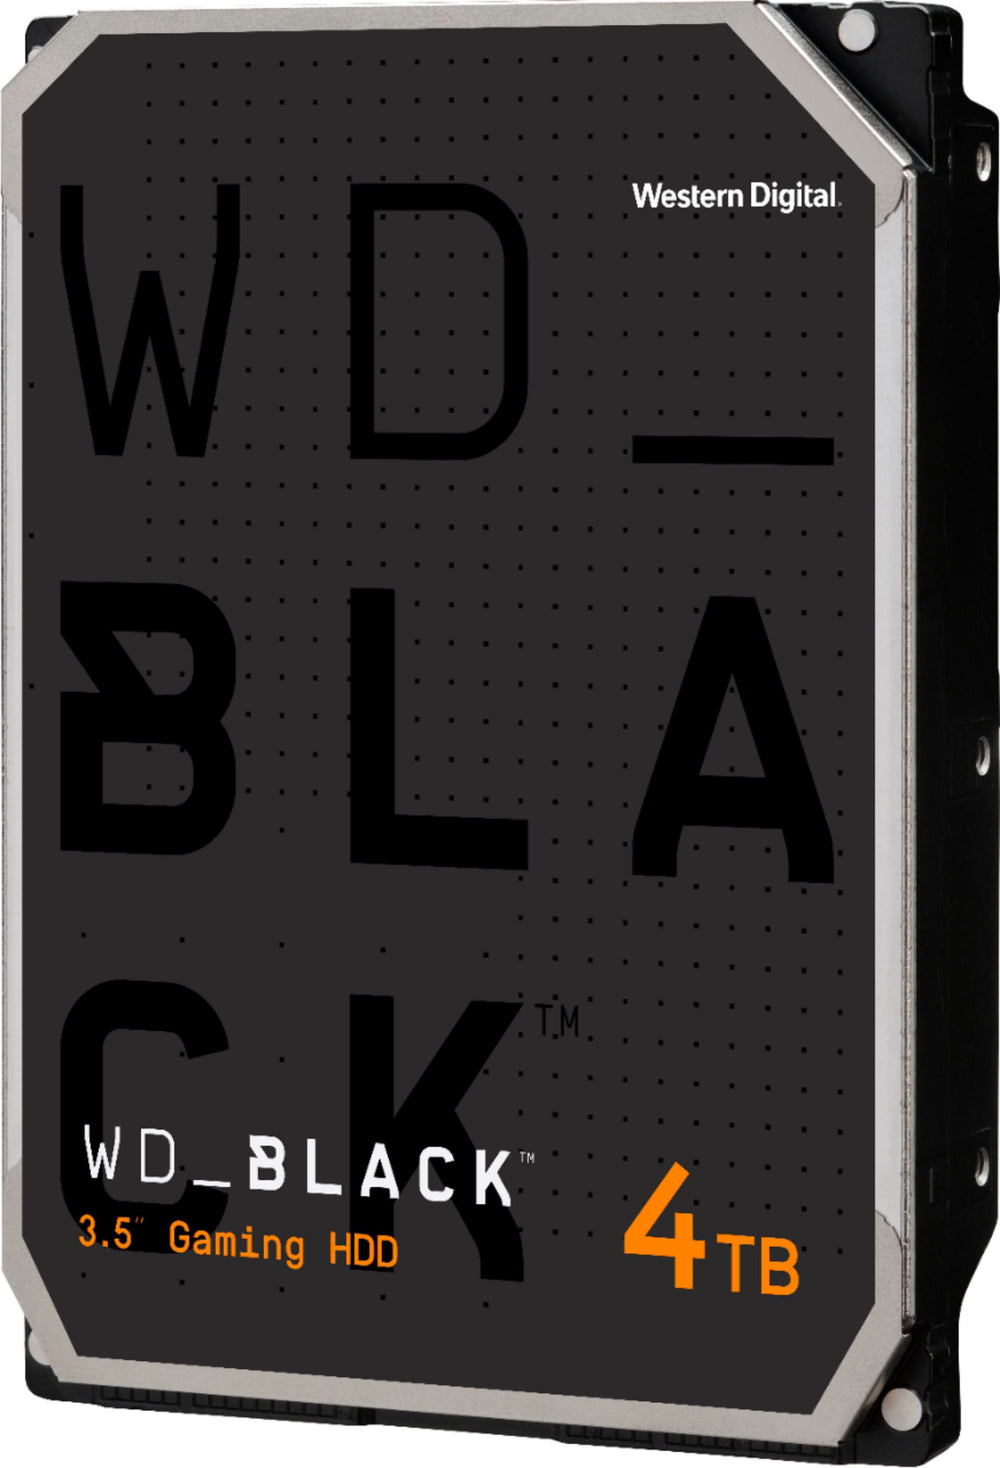 WD - BLACK Gaming 4TB Internal SATA Hard Drive for Desktops_1